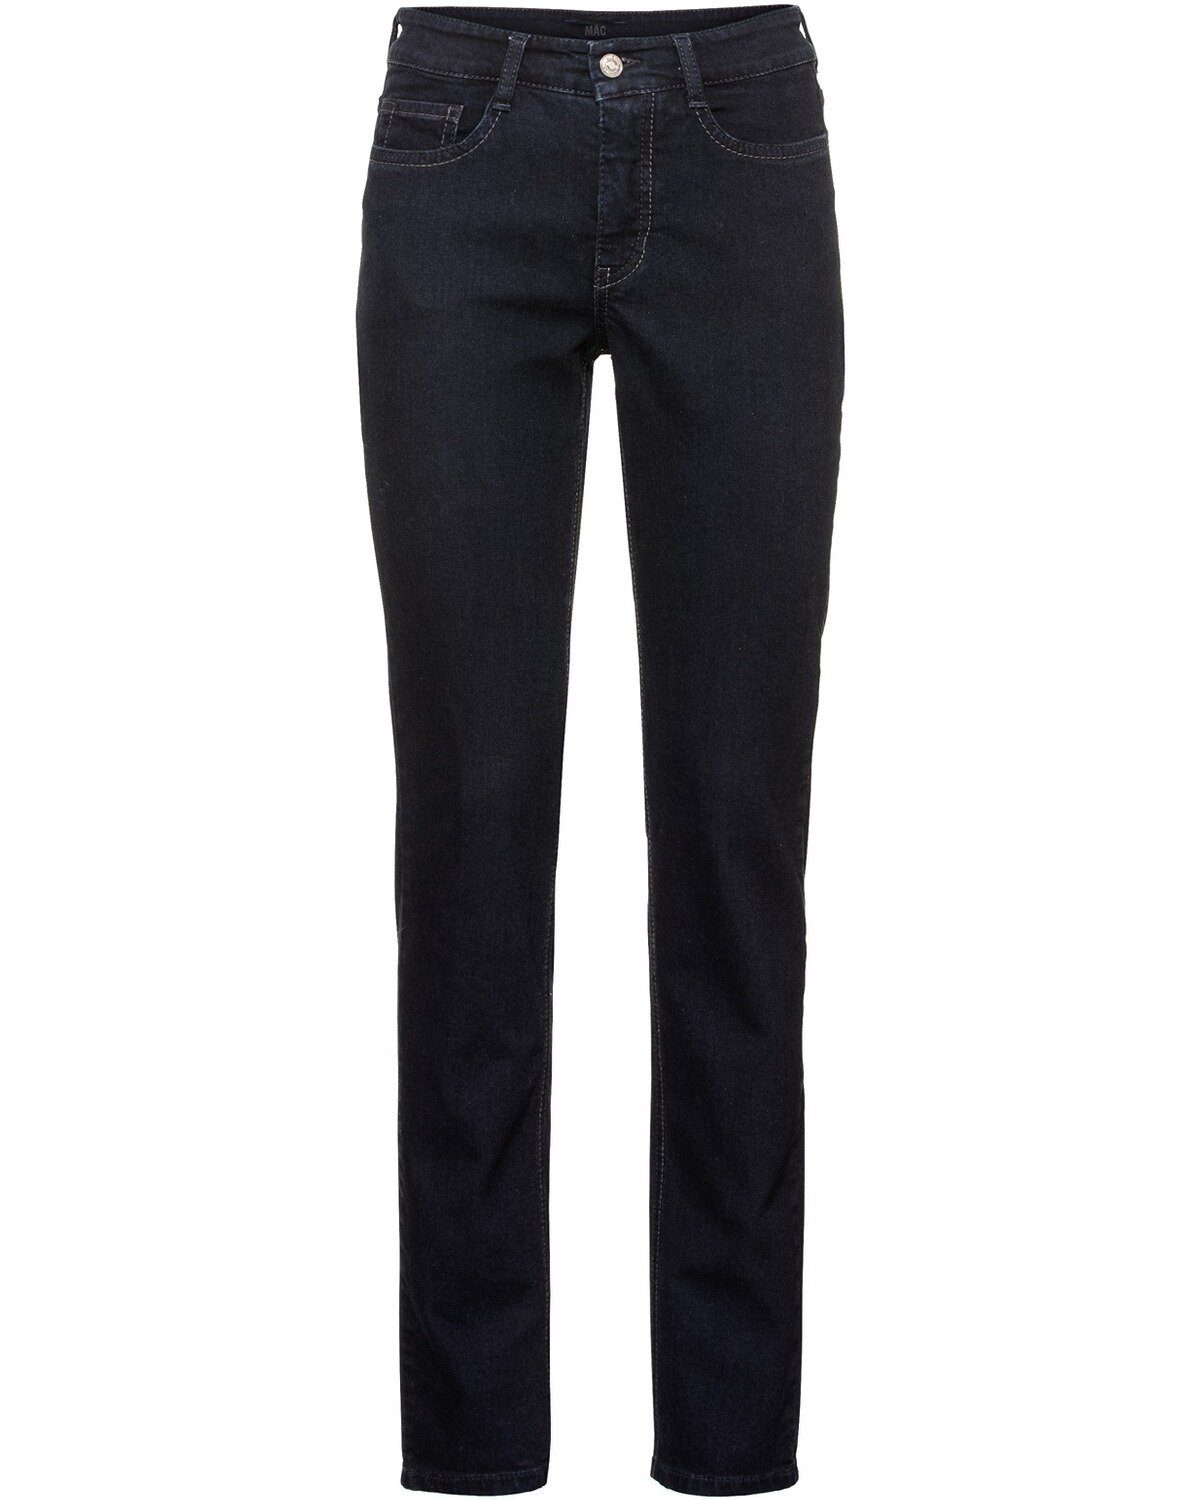 MAC 5-Pocket-Jeans Jeans Angela Pipe Schwarz/L34